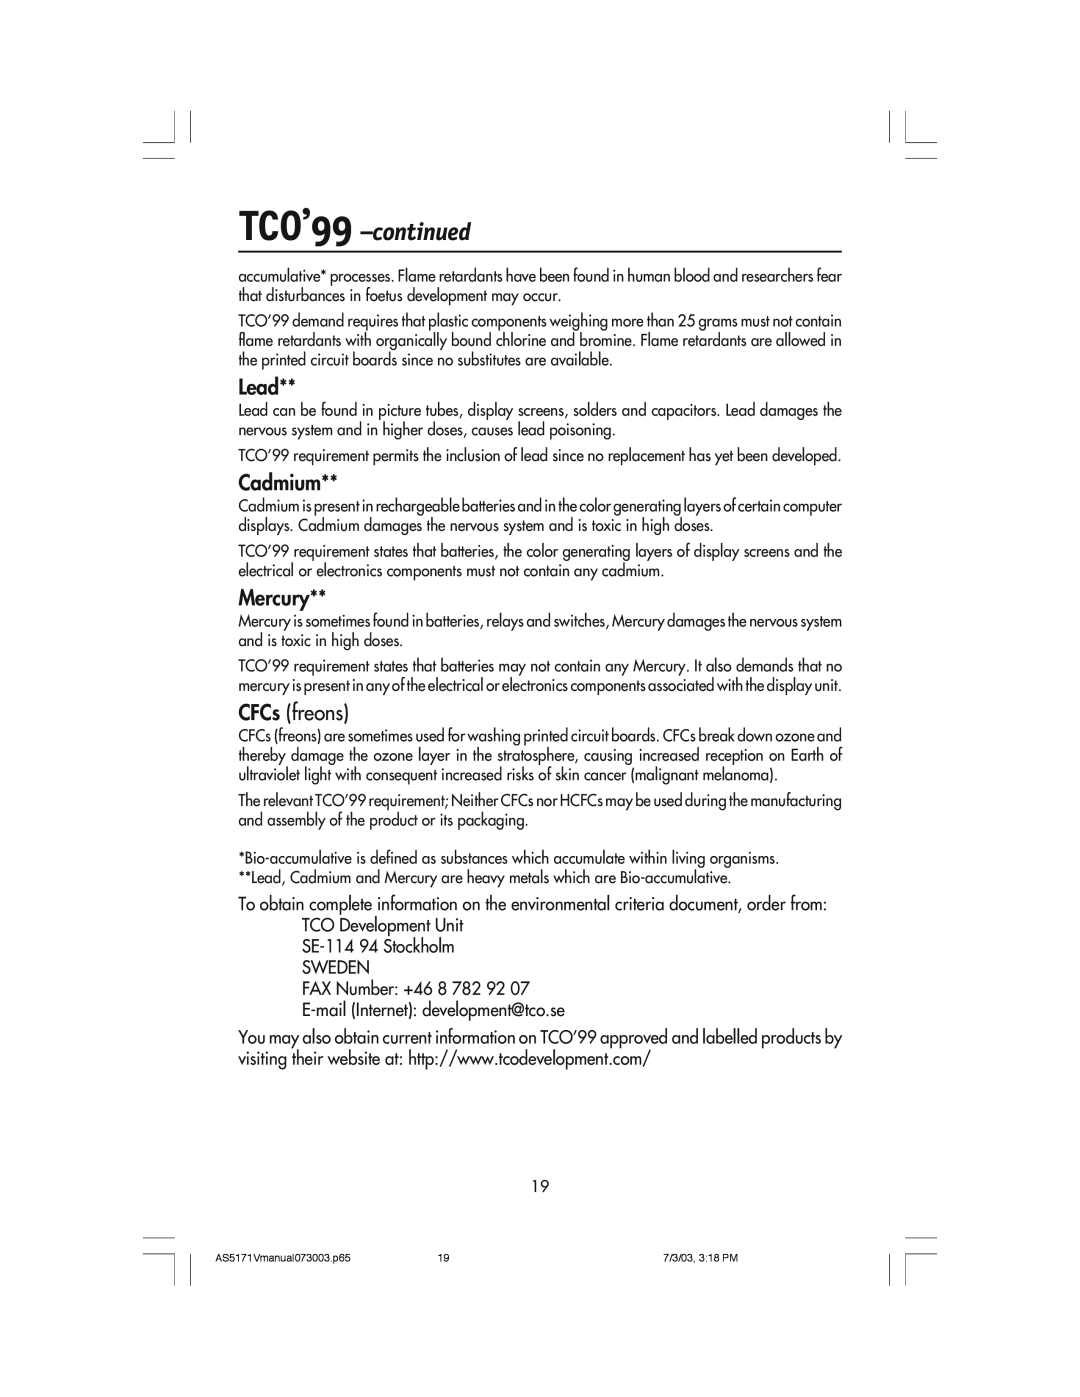 NEC LCD71V manual TCO’99 -continued, Lead, Cadmium, Mercury, CFCs freons 